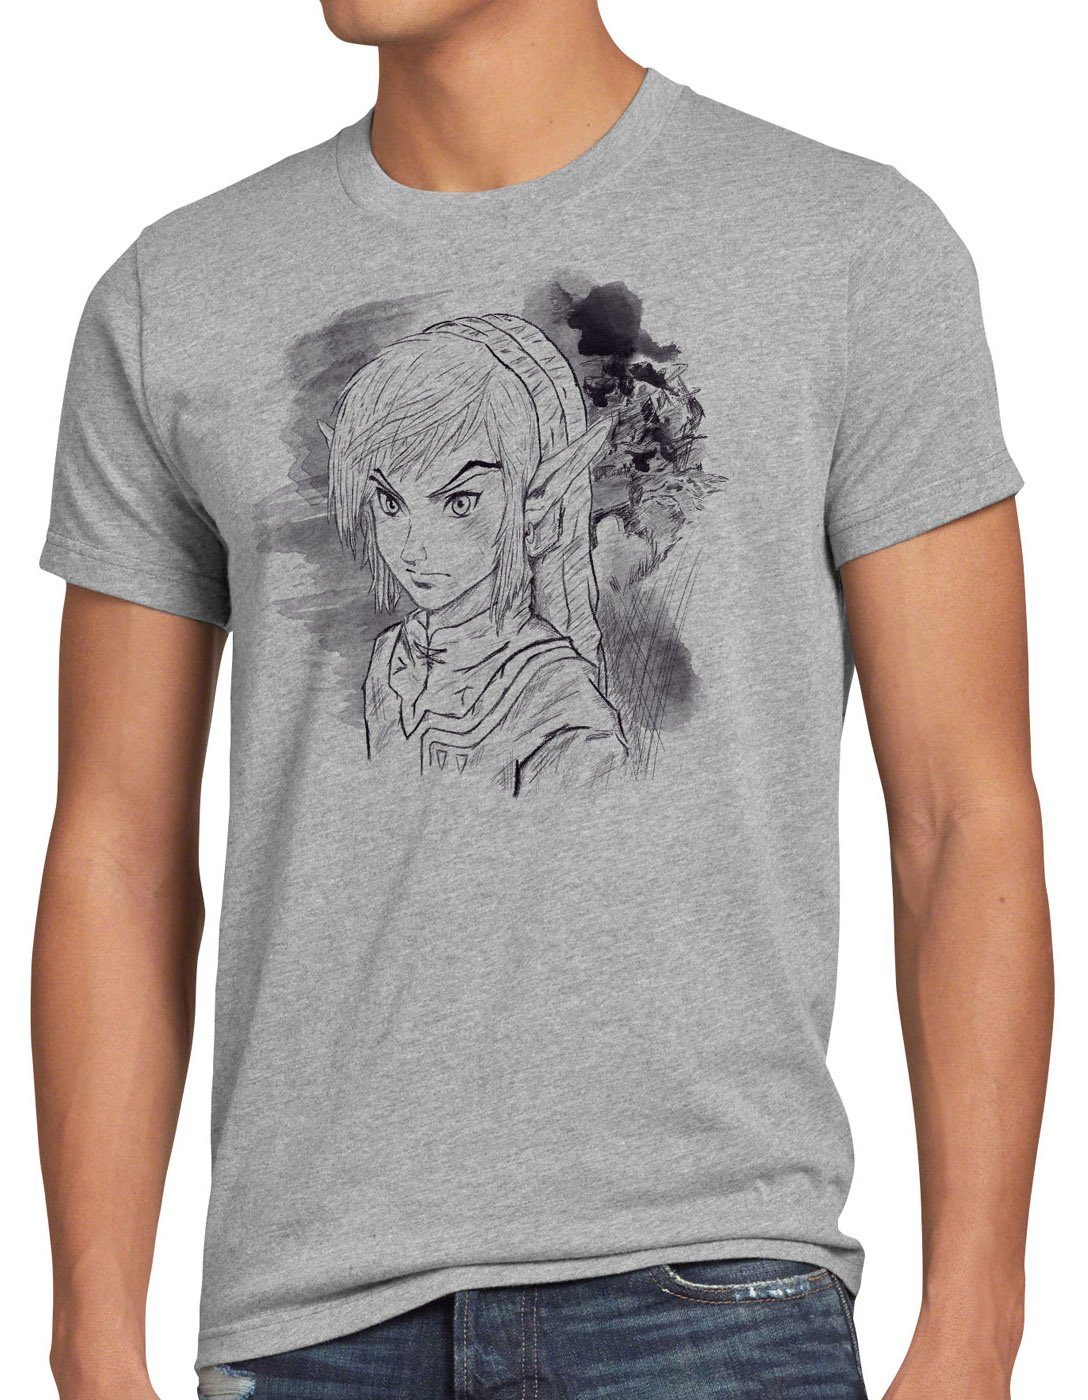 style3 Print-Shirt Herren T-Shirt Link Legend switch zelda game gamer wild boy hyrule amiibo spiel grau meliert